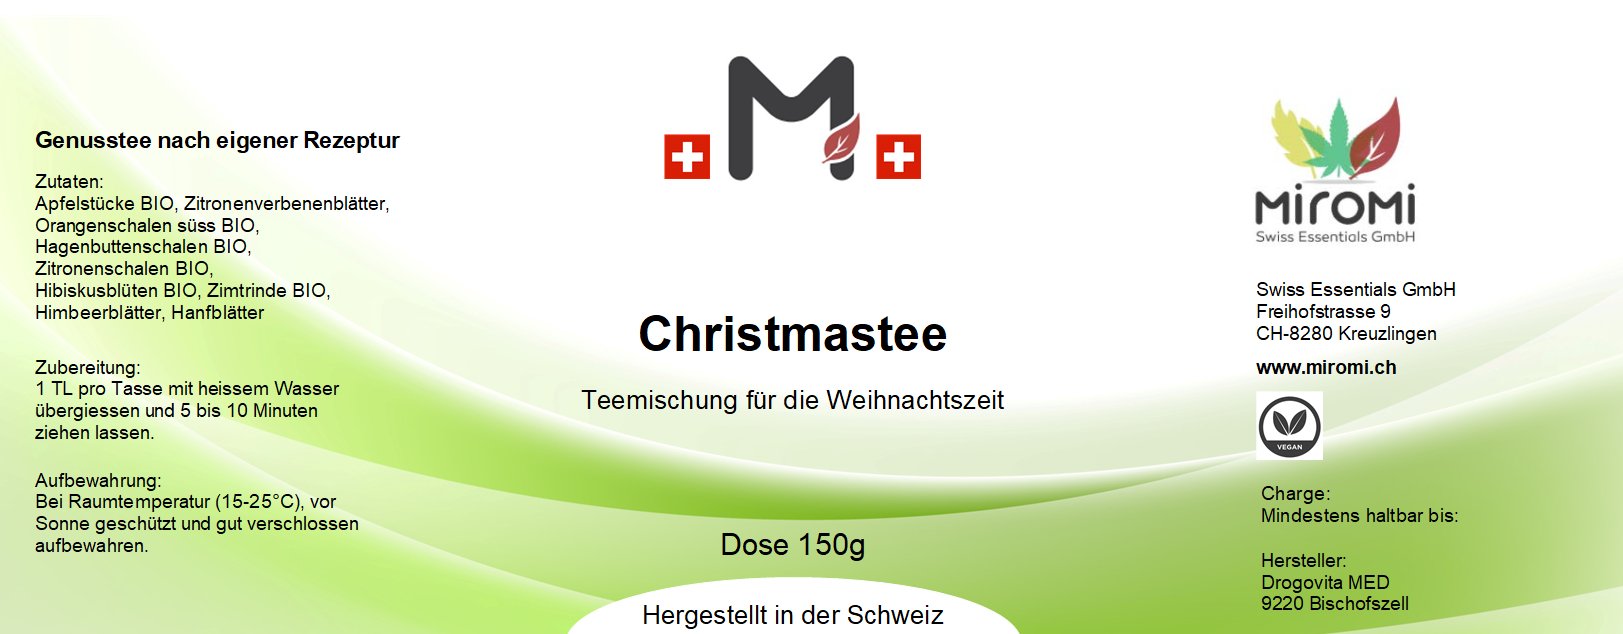 Christmastee - MIROMI - Swiss Essentials GmbH